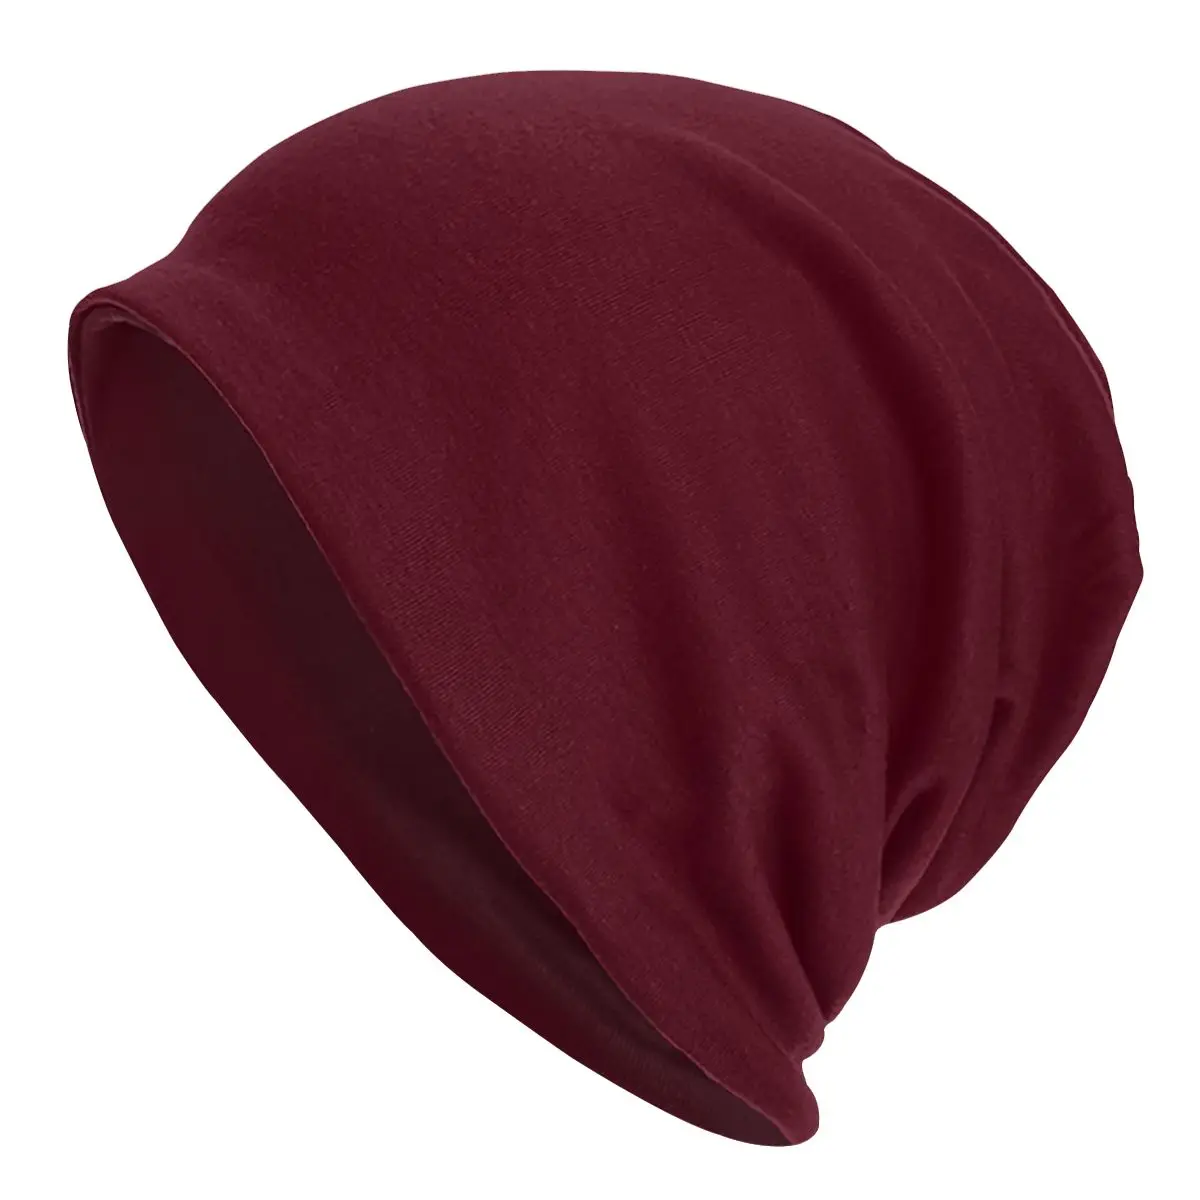 

Dark Burgundy Solid Color Bonnet Hats Hip Hop Autumn Winter Skullies Beanies Hat for Men Women Knit Hat Spring Warm Unisex Cap